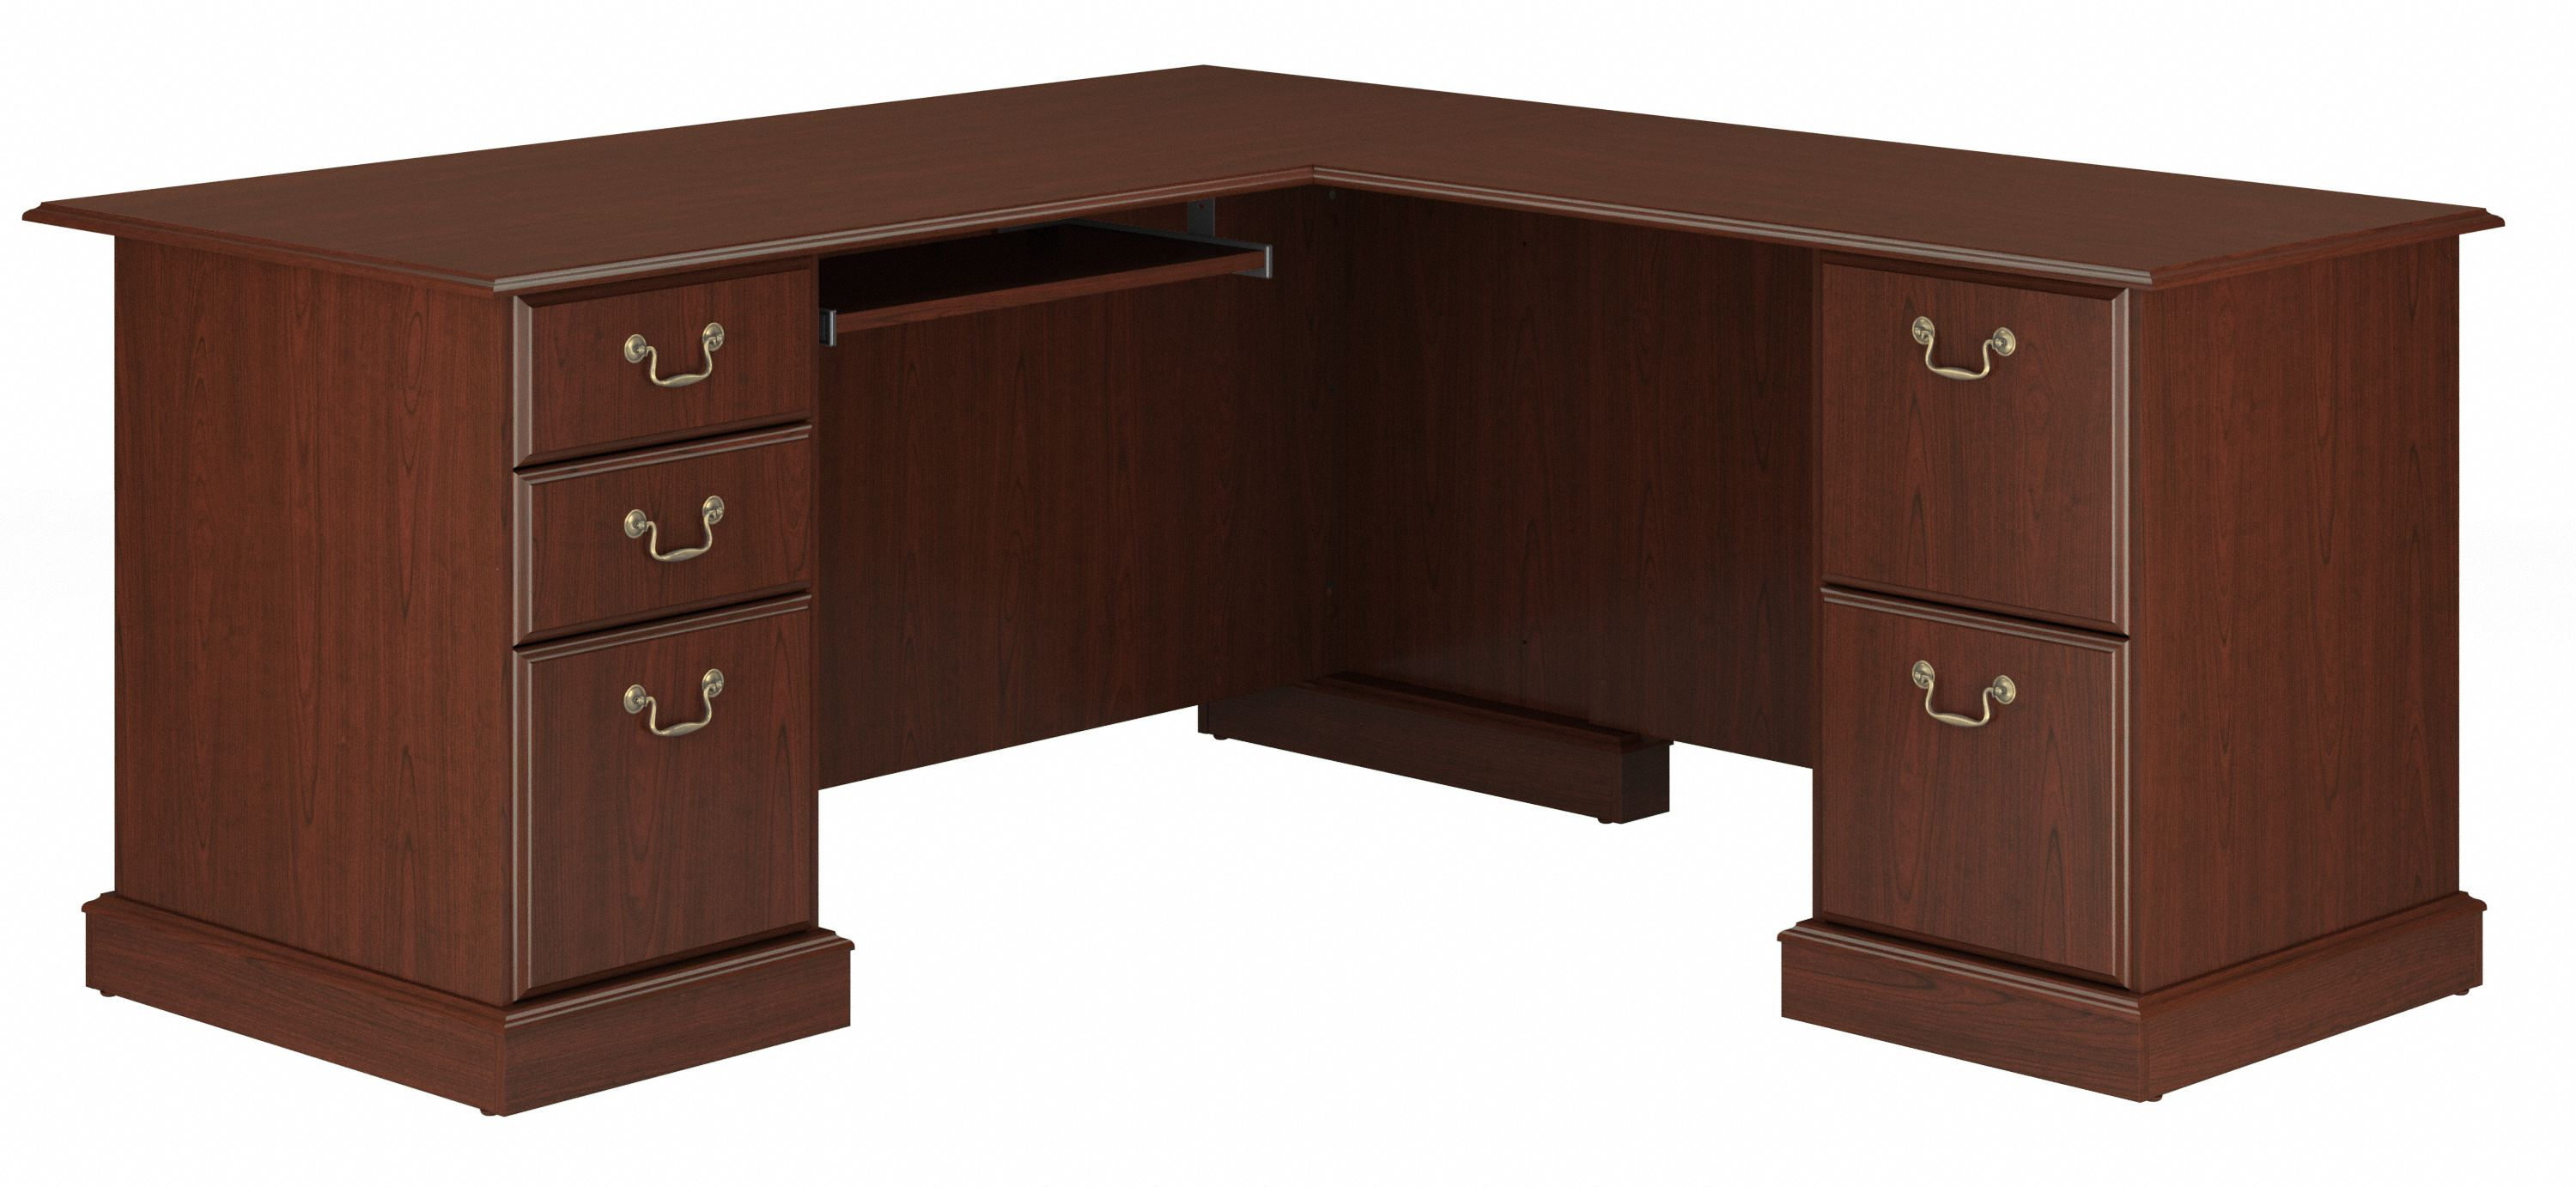 Shop Bush Furniture Saratoga L Shaped Computer Desk with Drawers 02 EX45670-03K #color_harvest cherry